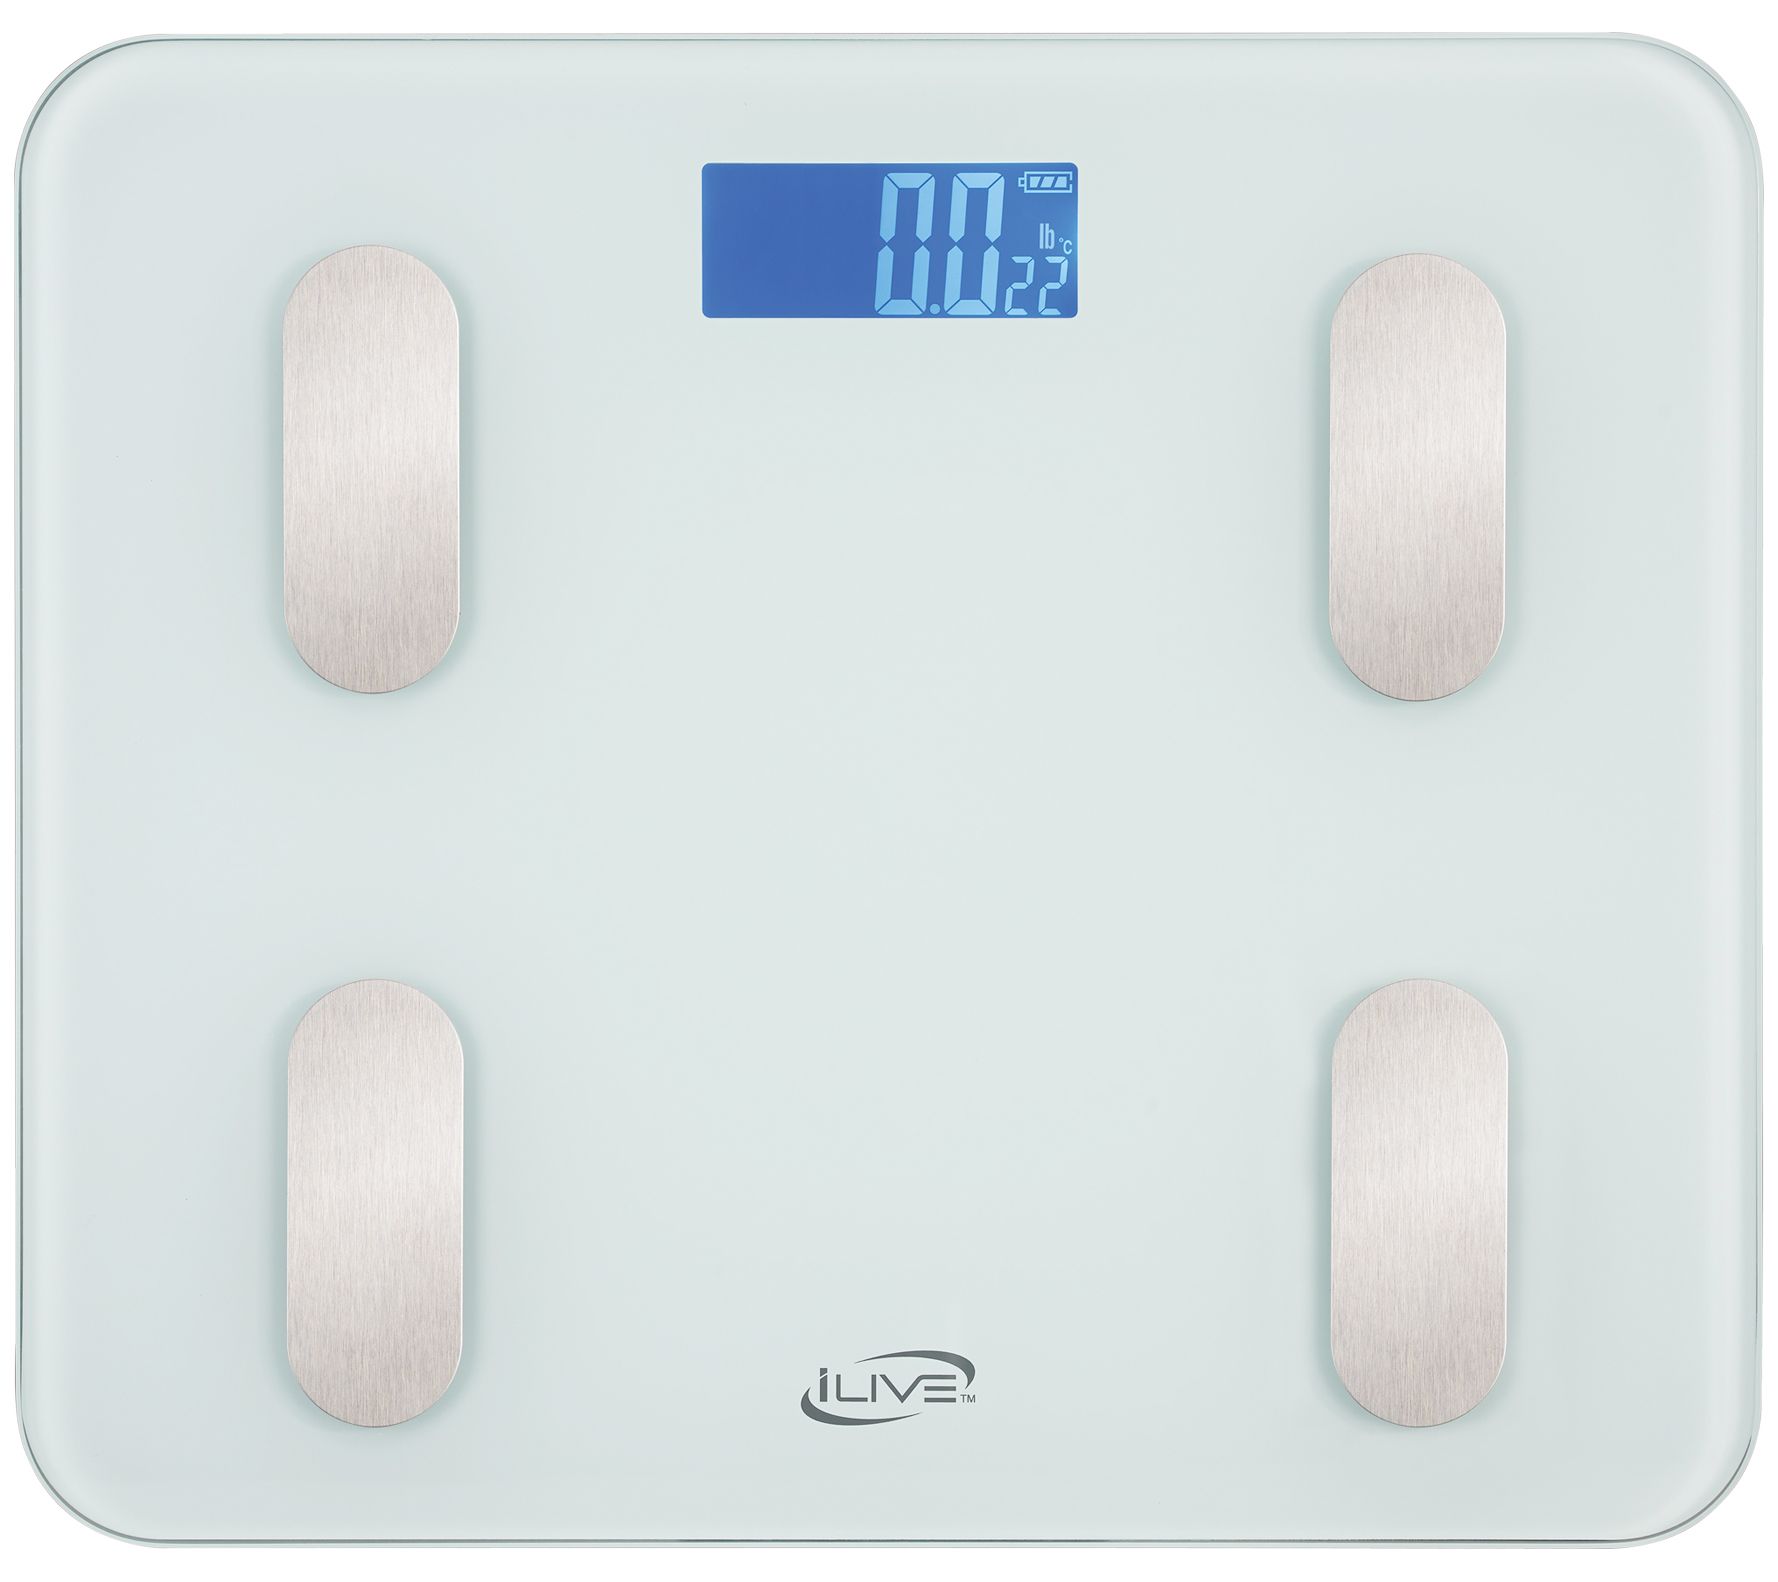 iLive Smart Digital Body/Weight Scale - QVC.com